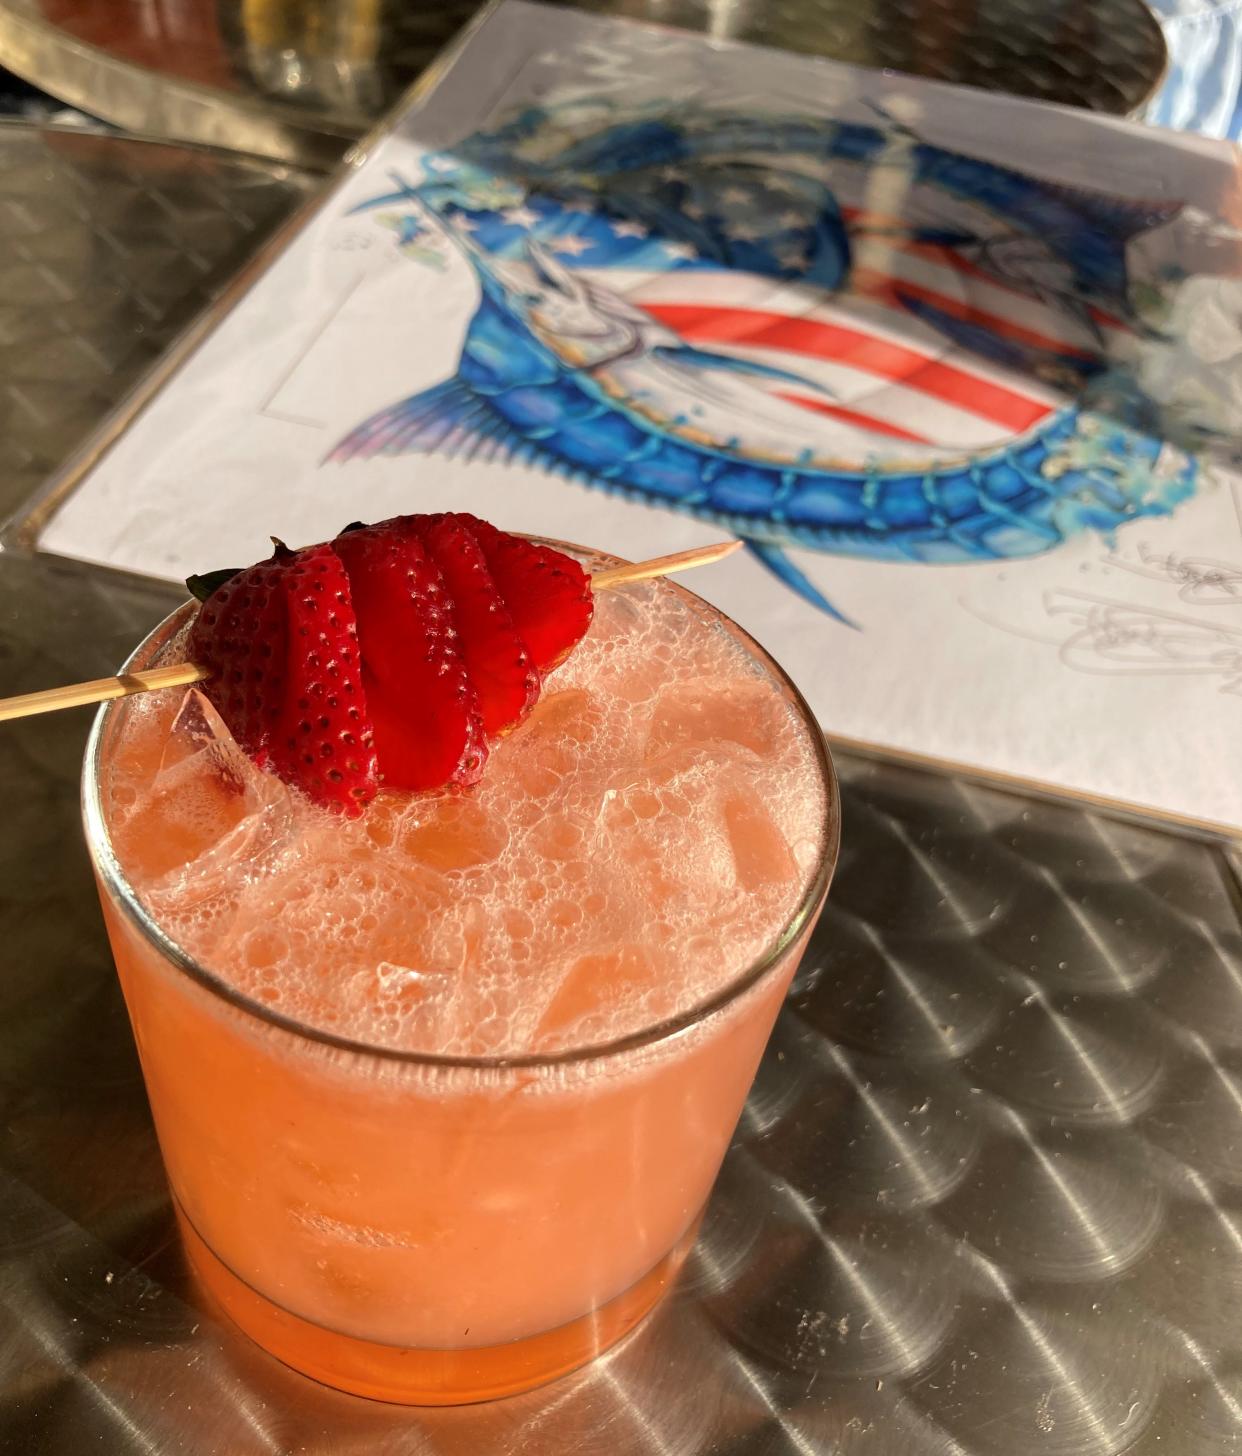 A strawberry margarita made with Cape Fear Distillery's Billfish Tequila at Sauce'd in downtown Wilmington. ALLISON BALLARD/STARNEWS